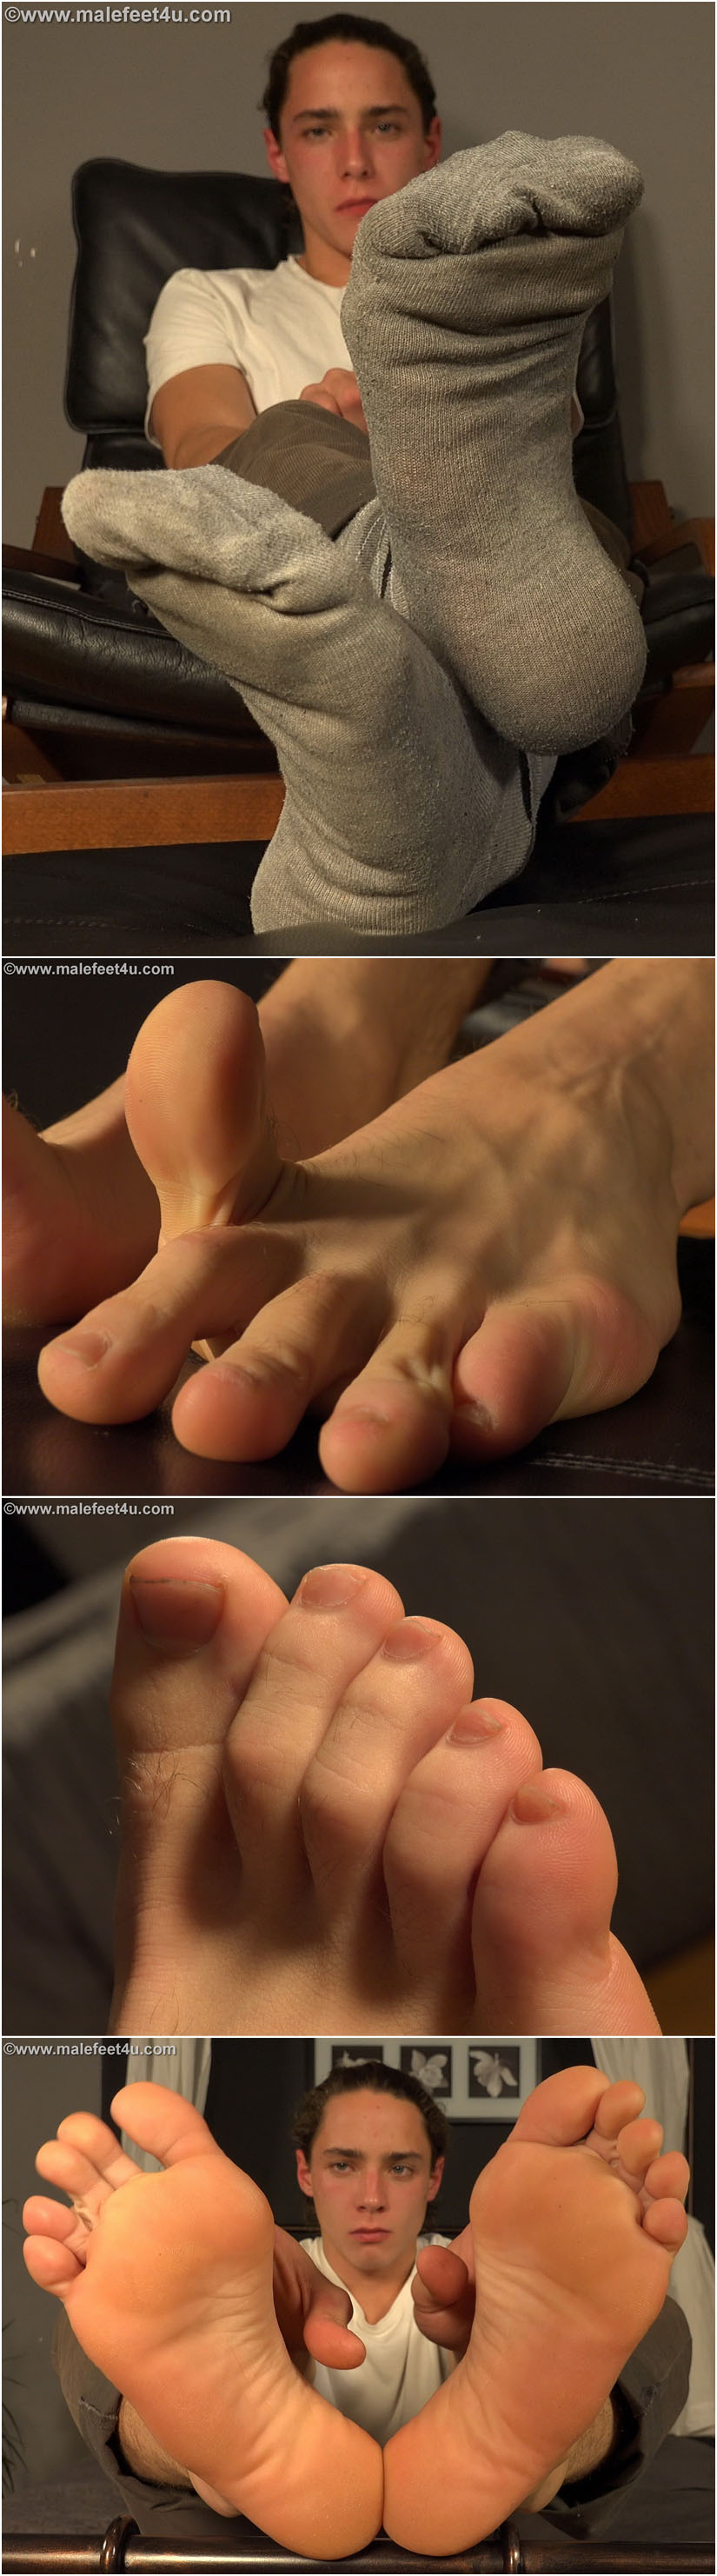 european amateur guy's bare feet